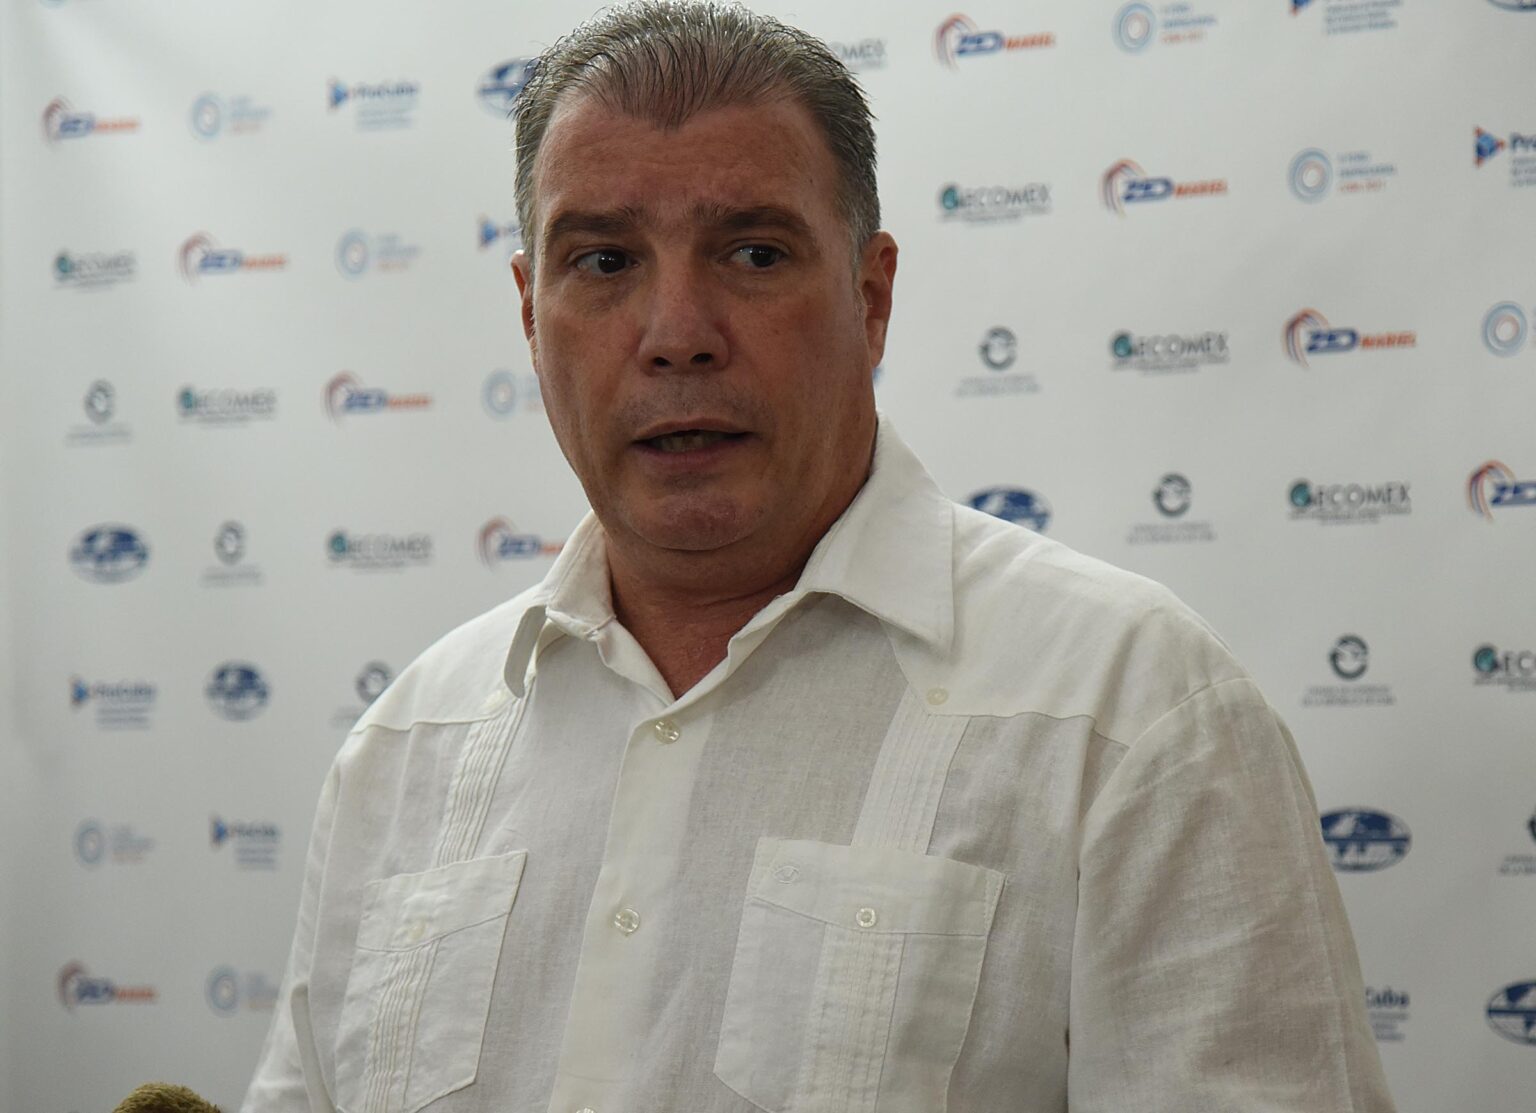 Minister of Tourism Juan Carlos Garcia